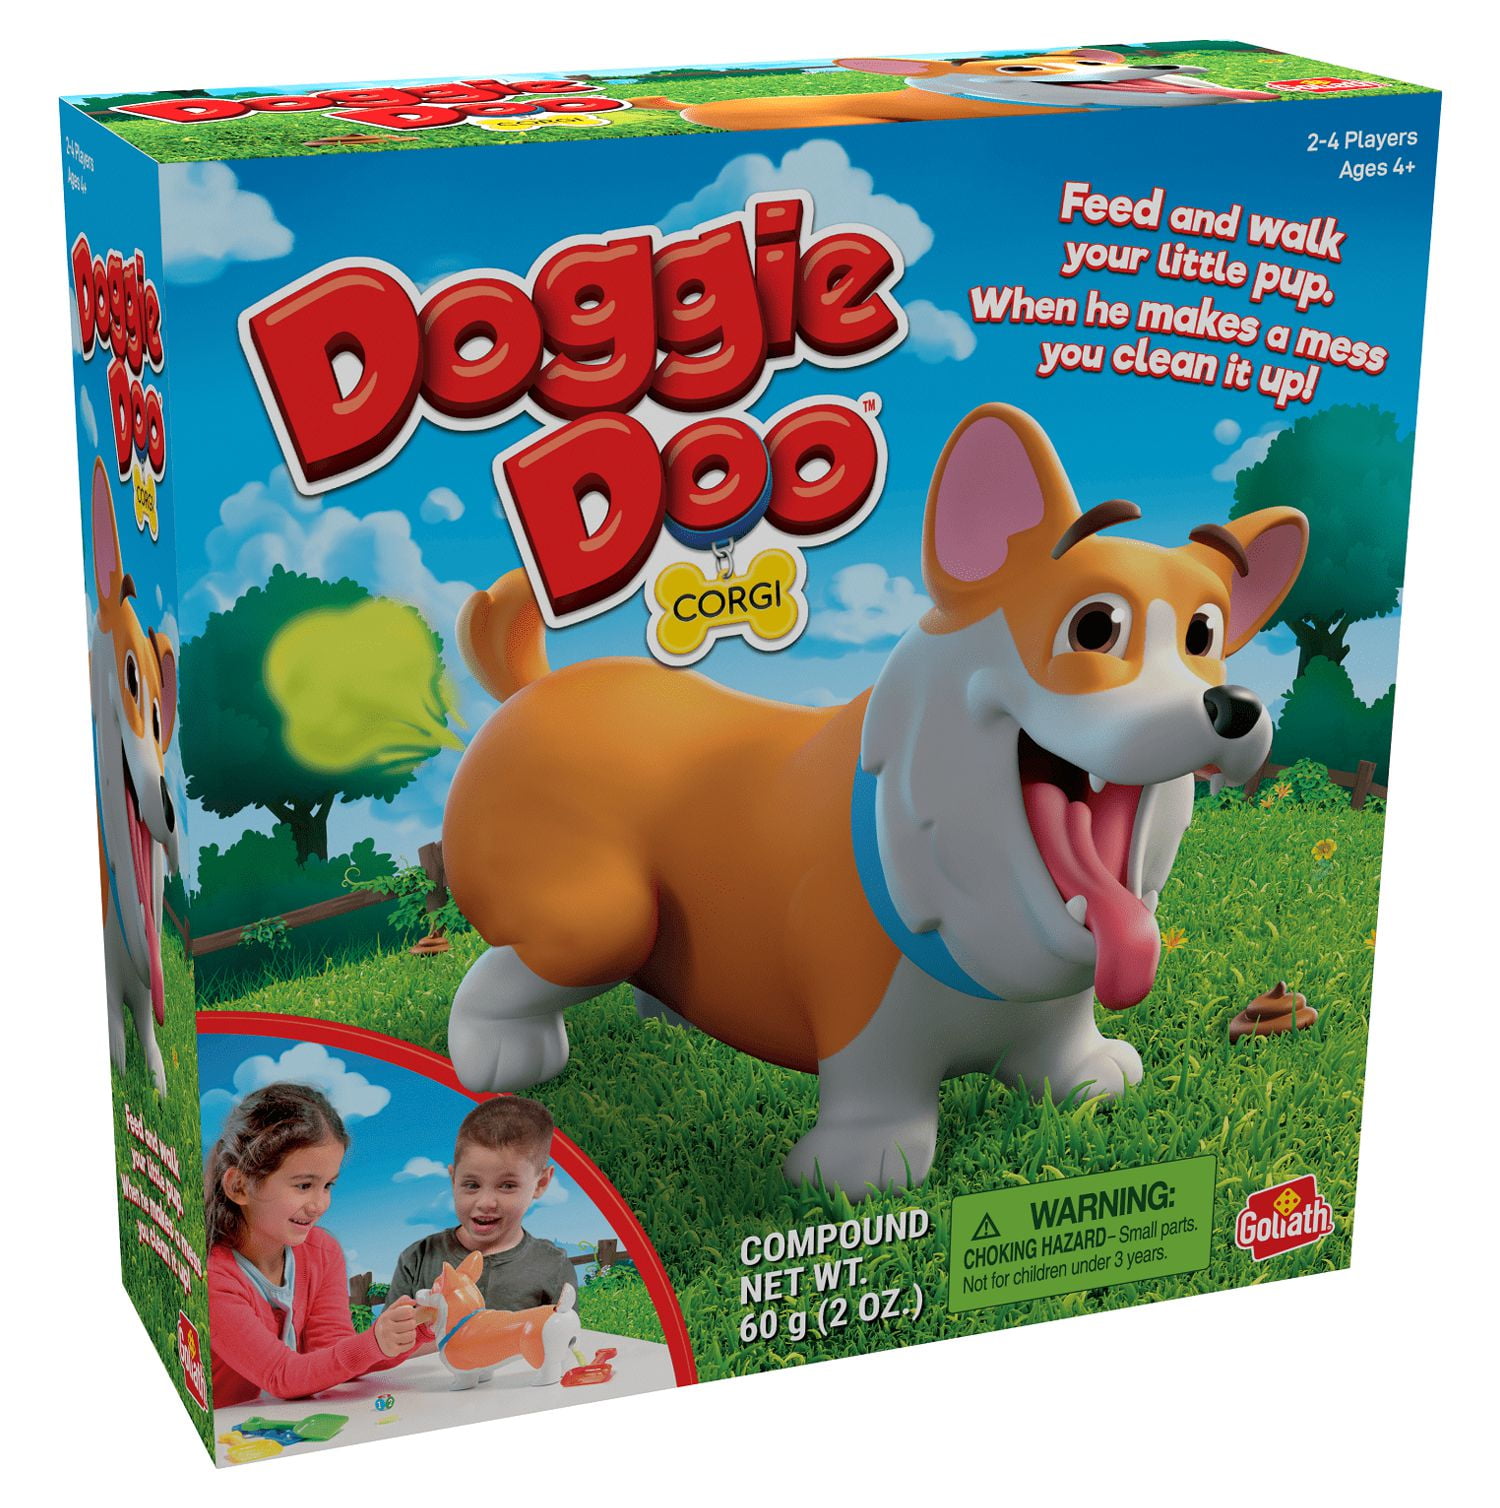 Doggie Doo Corgi 3/ Mc – Awesome Toys Gifts